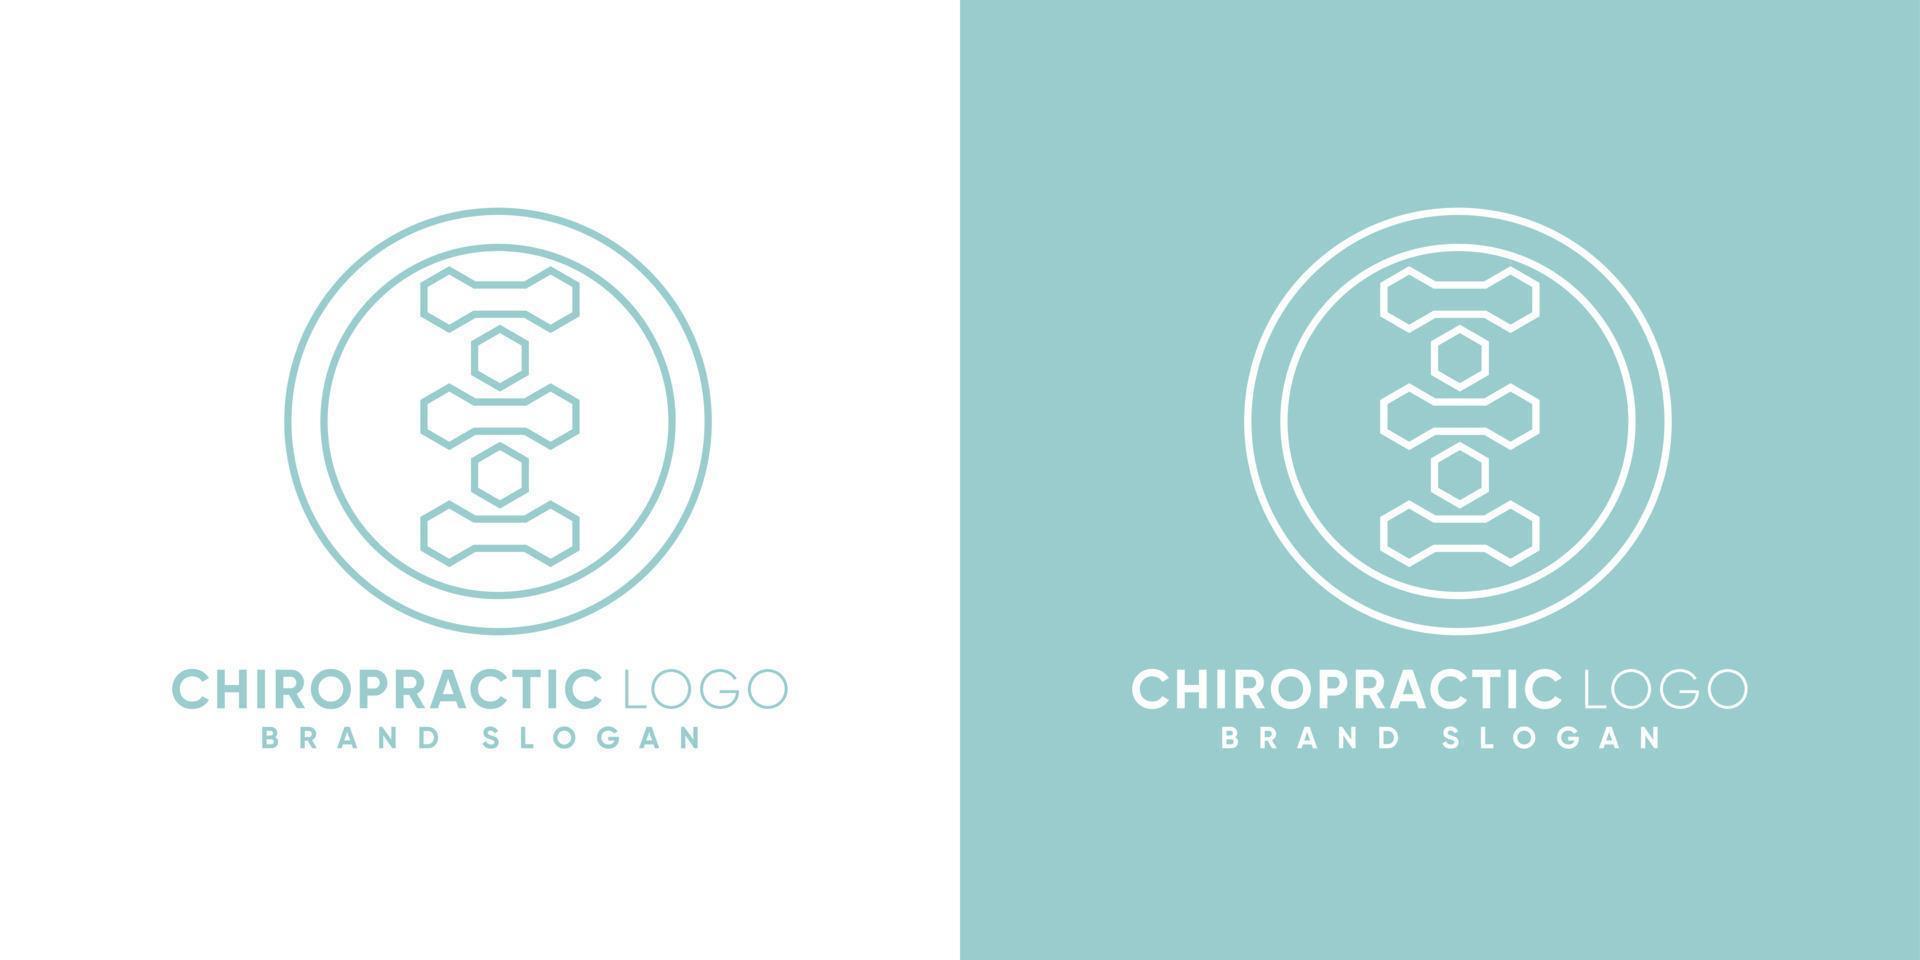 Rückenknochen-Chiropraktik-Logo mit modernem Premium-Vektor vektor